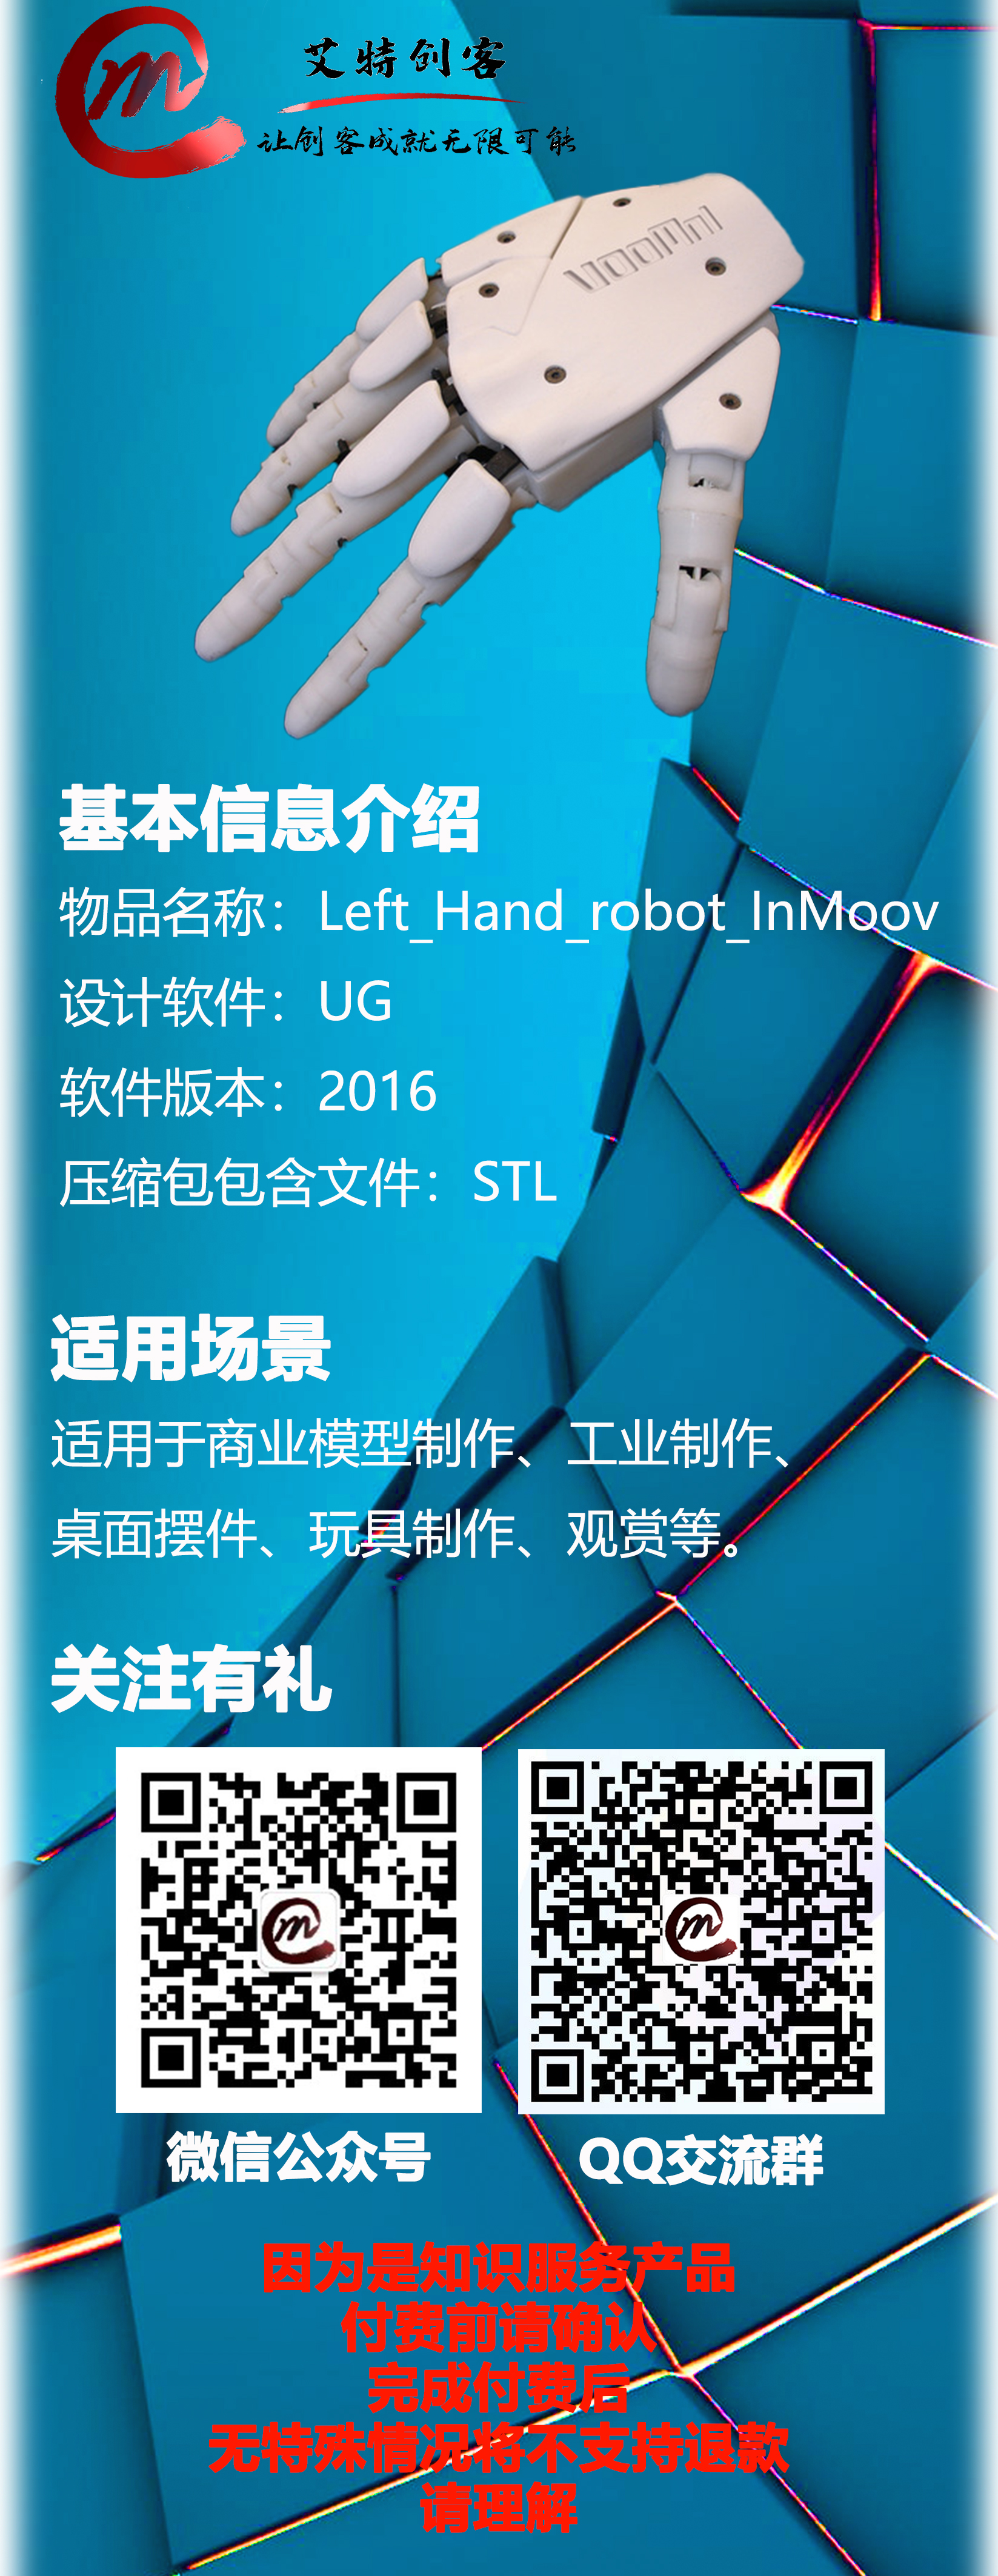 Left_Hand_robot_InMoov.jpg